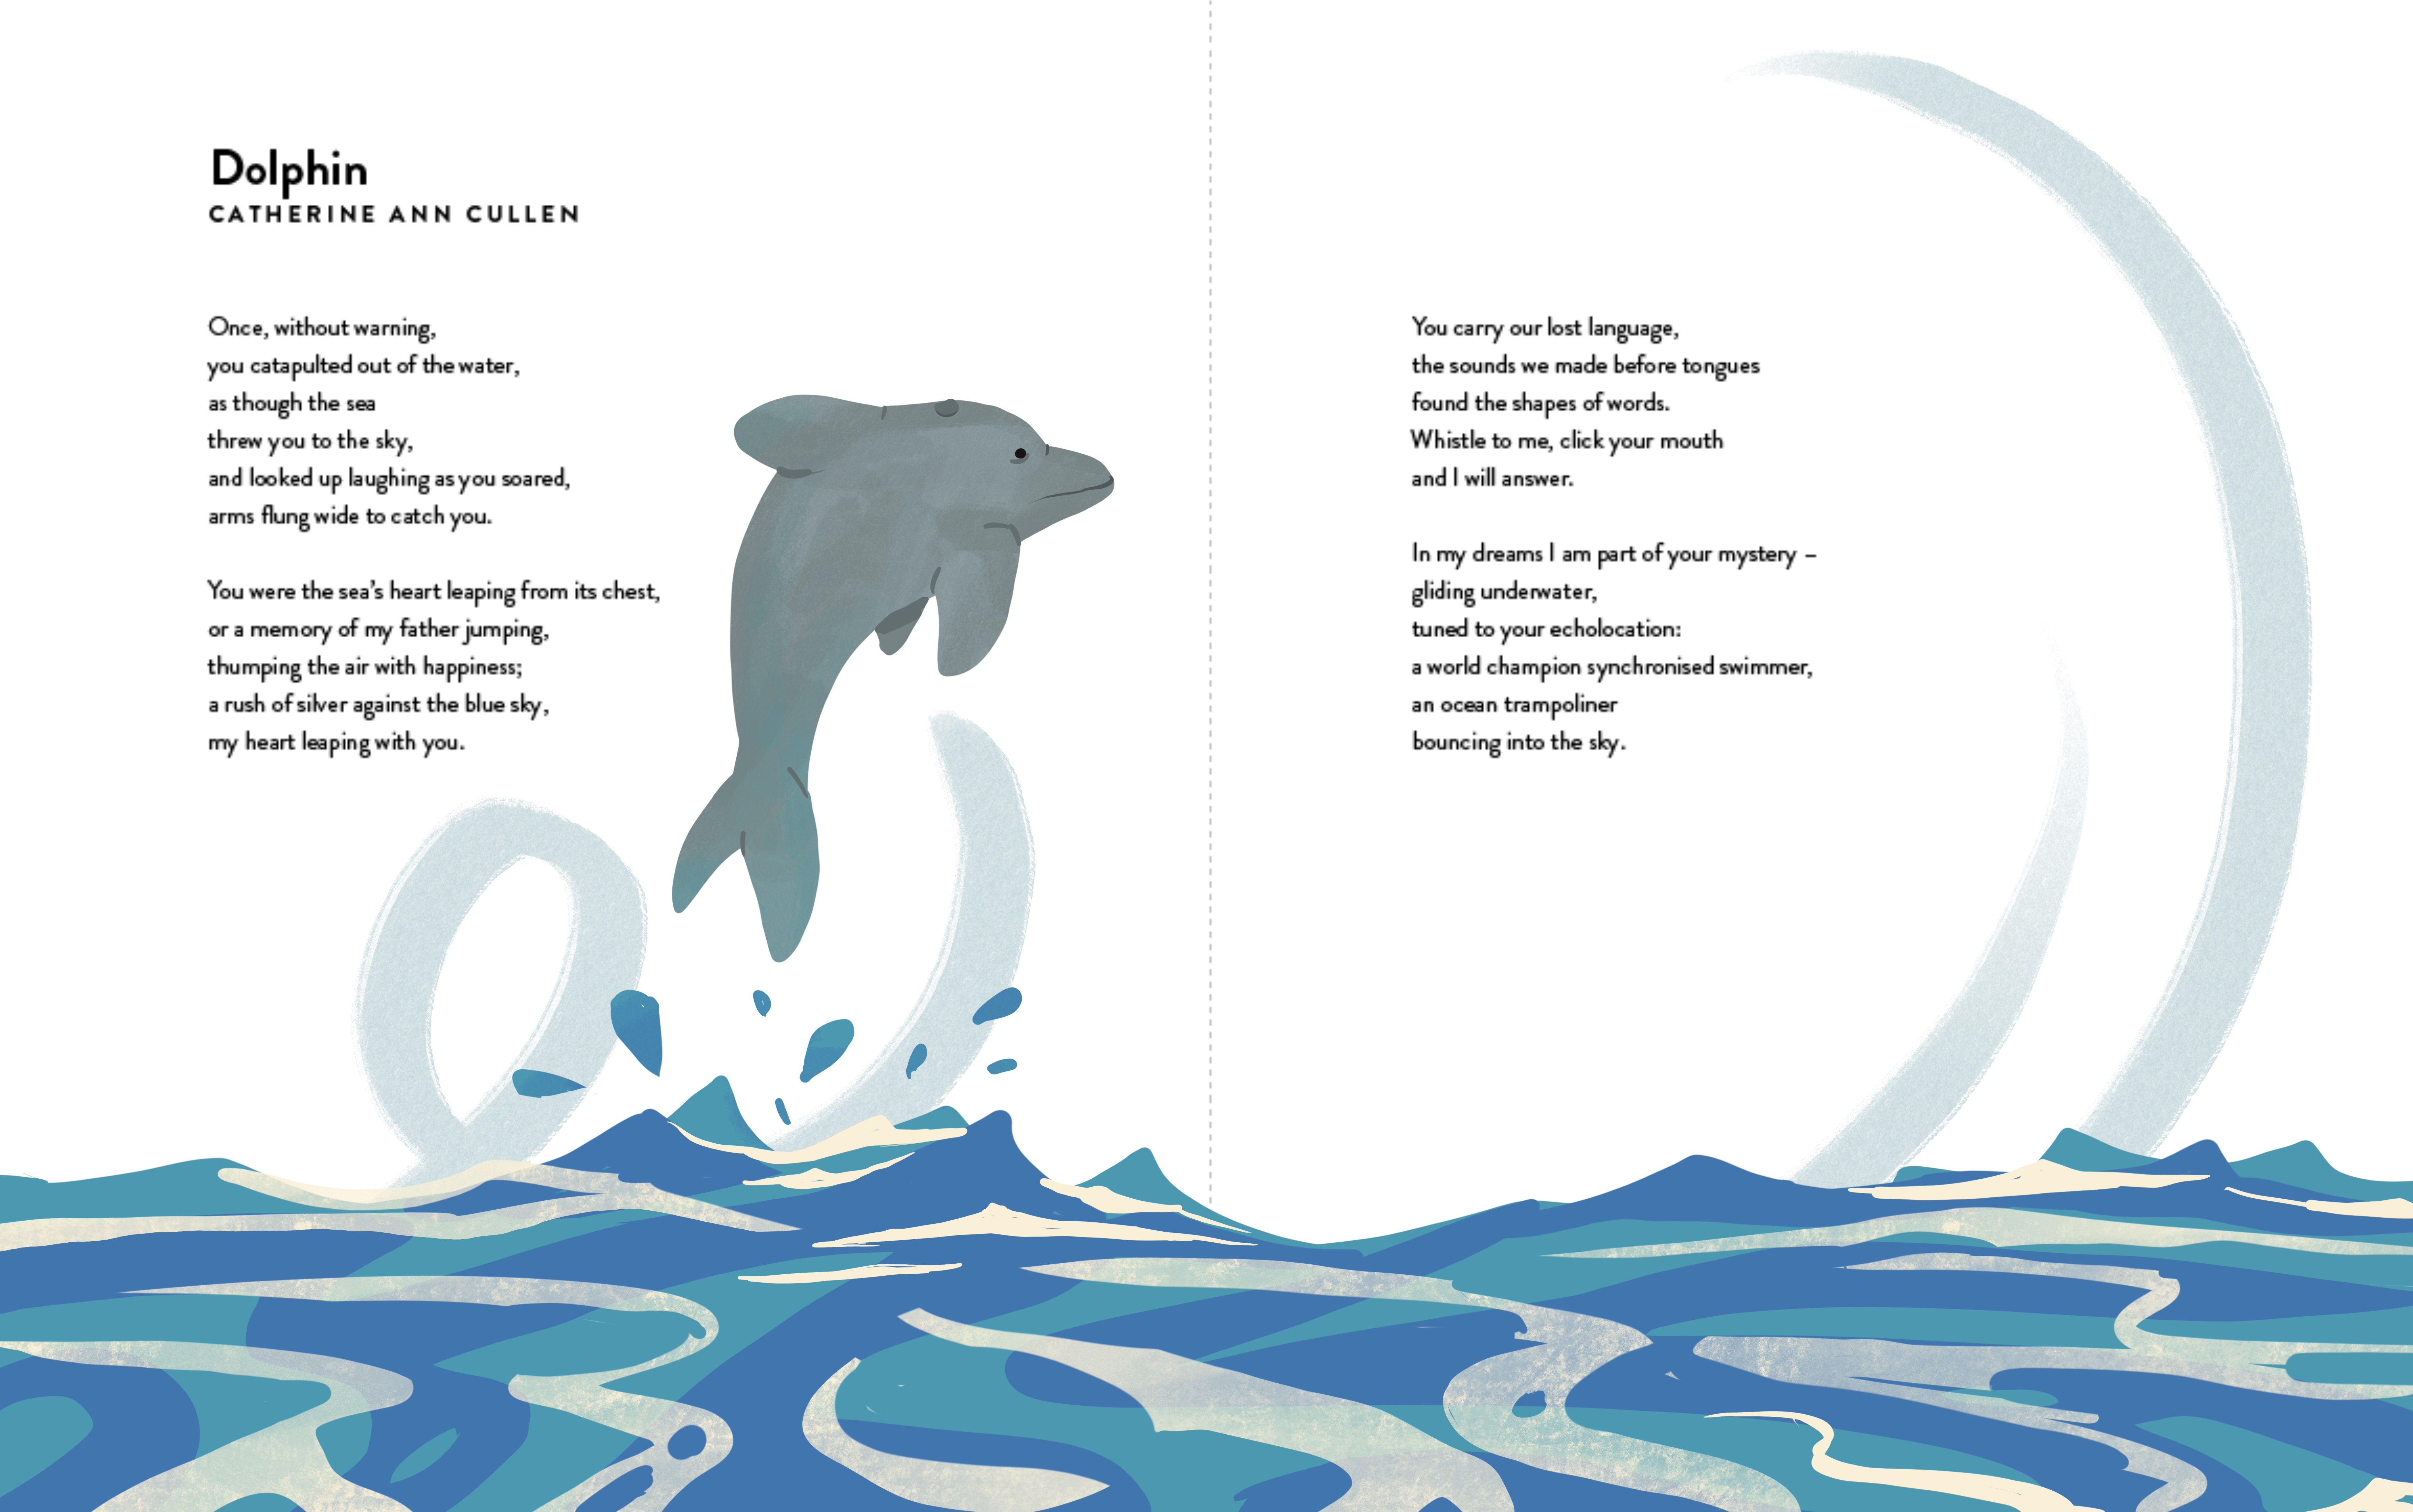 I Am the Wind: Irish Poems for Children Everywhere